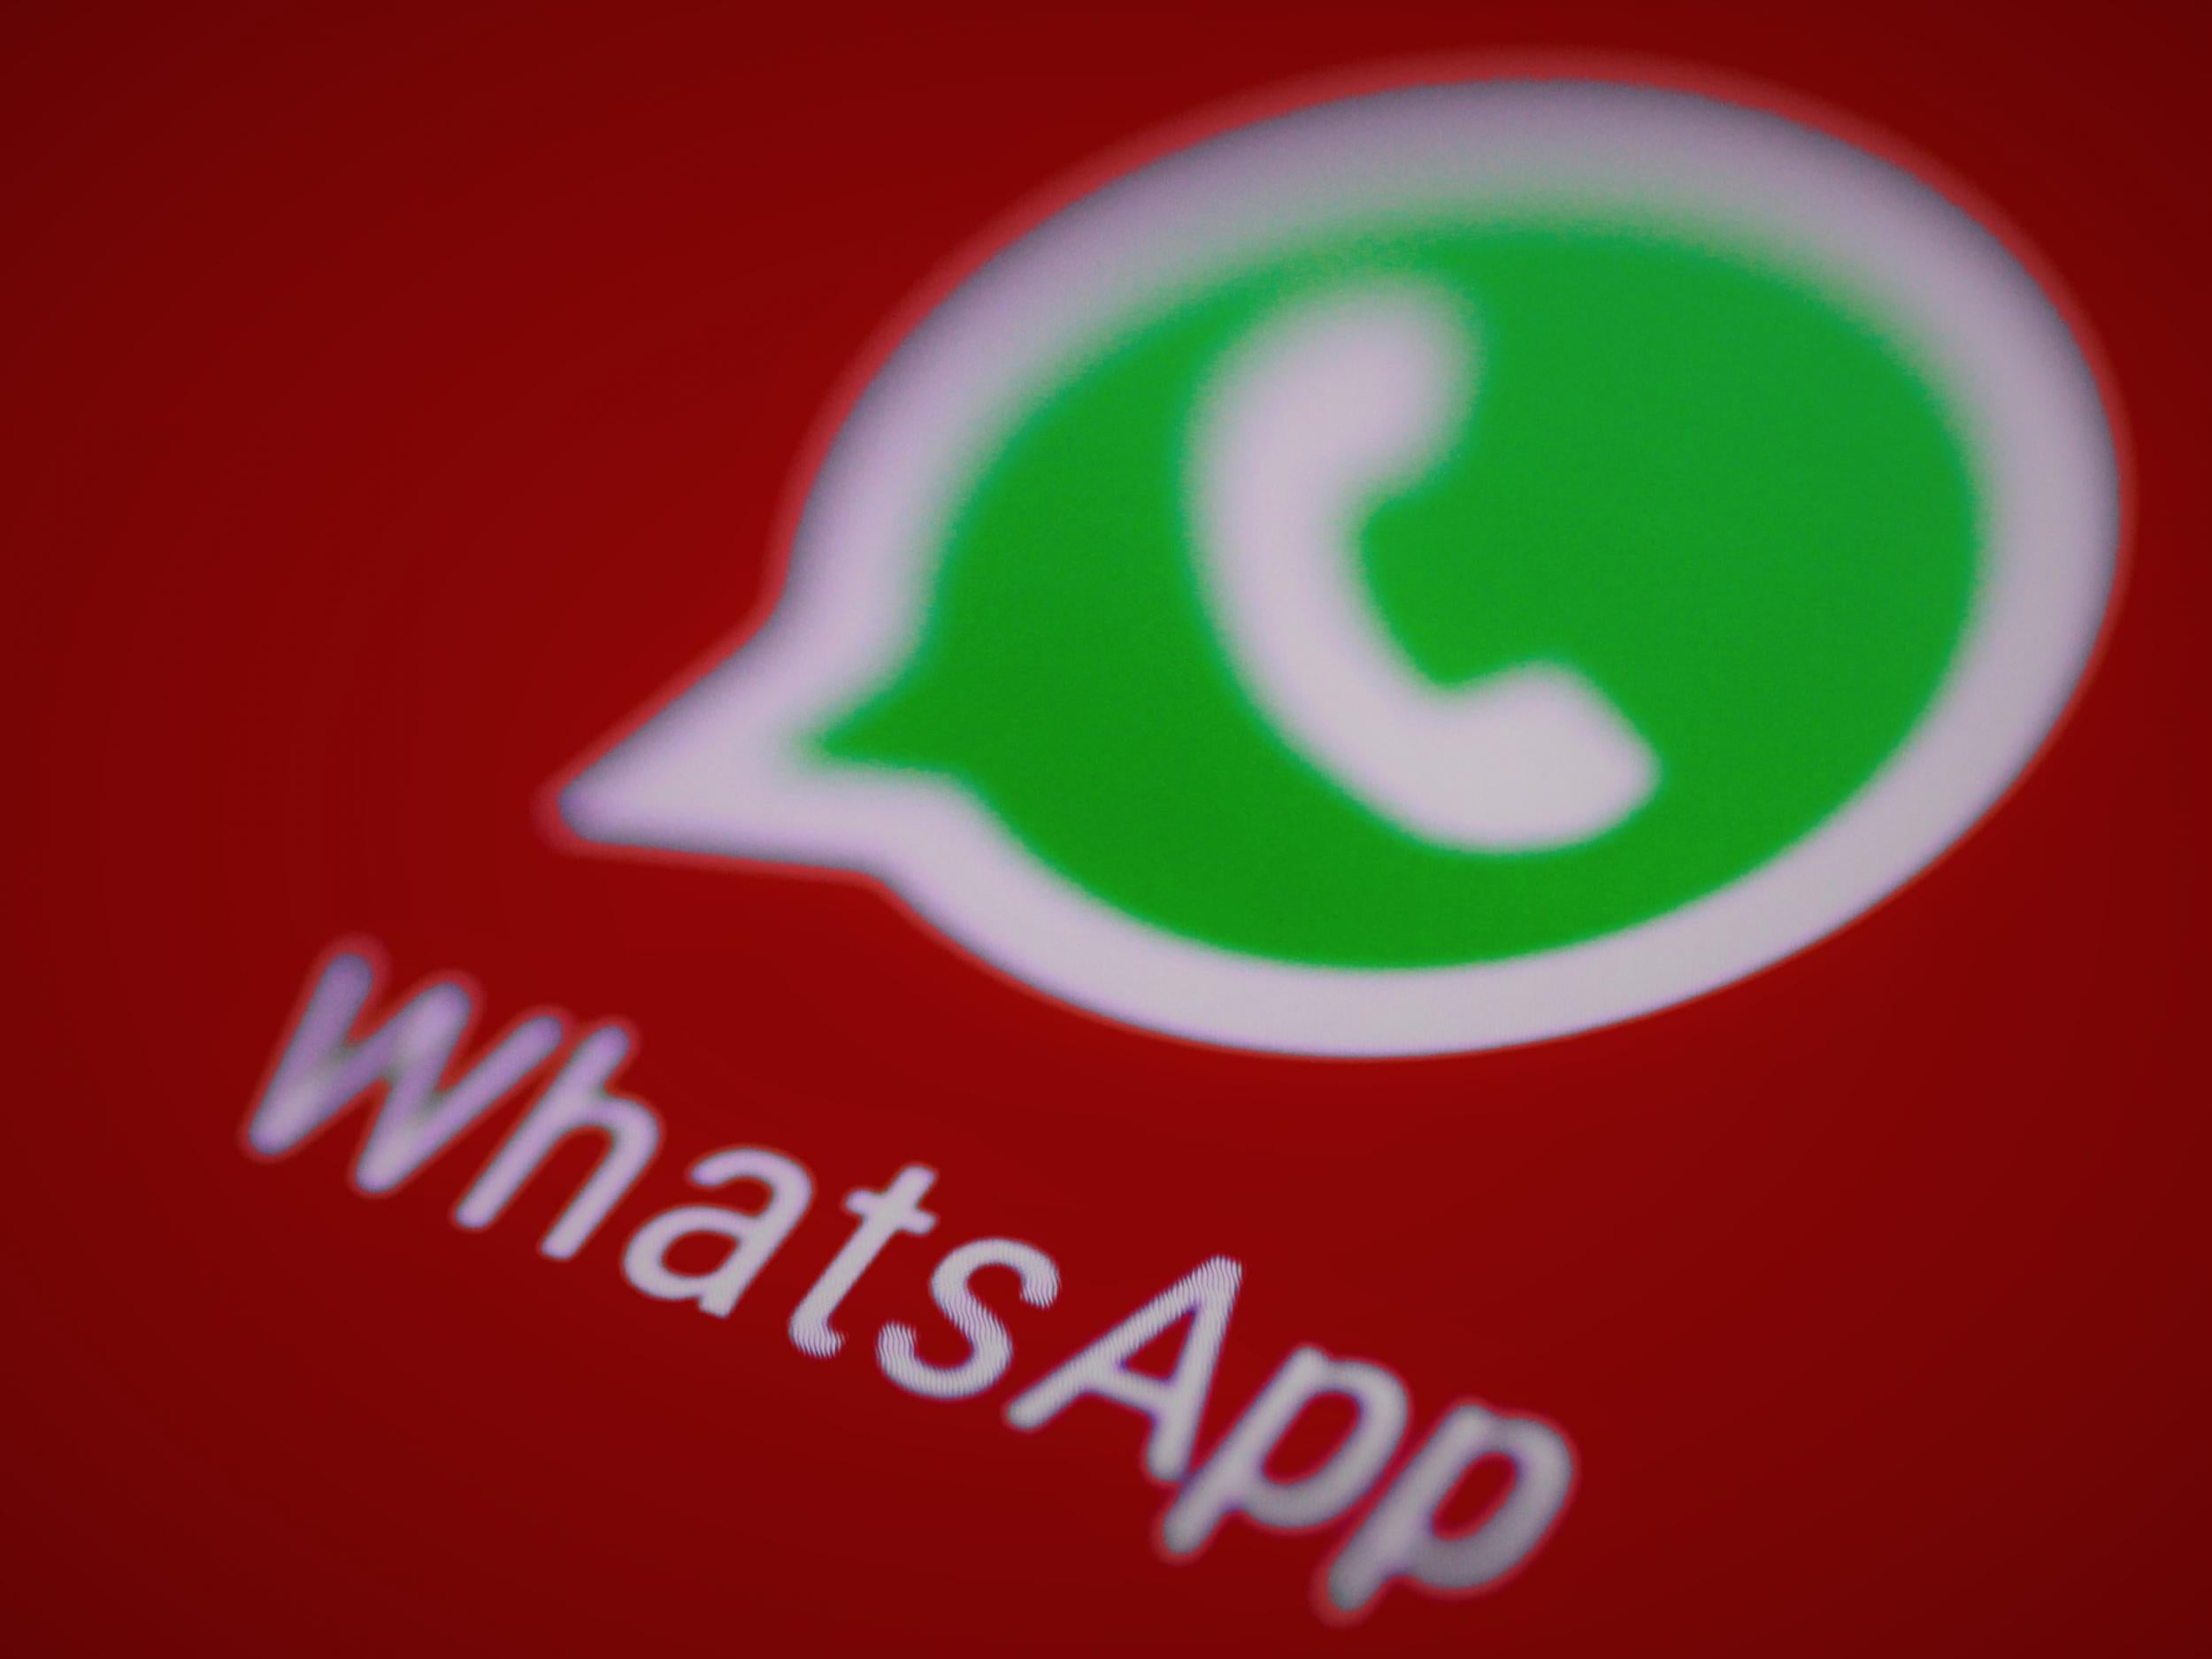 WhatsApp was the most-blocked platform in 2019